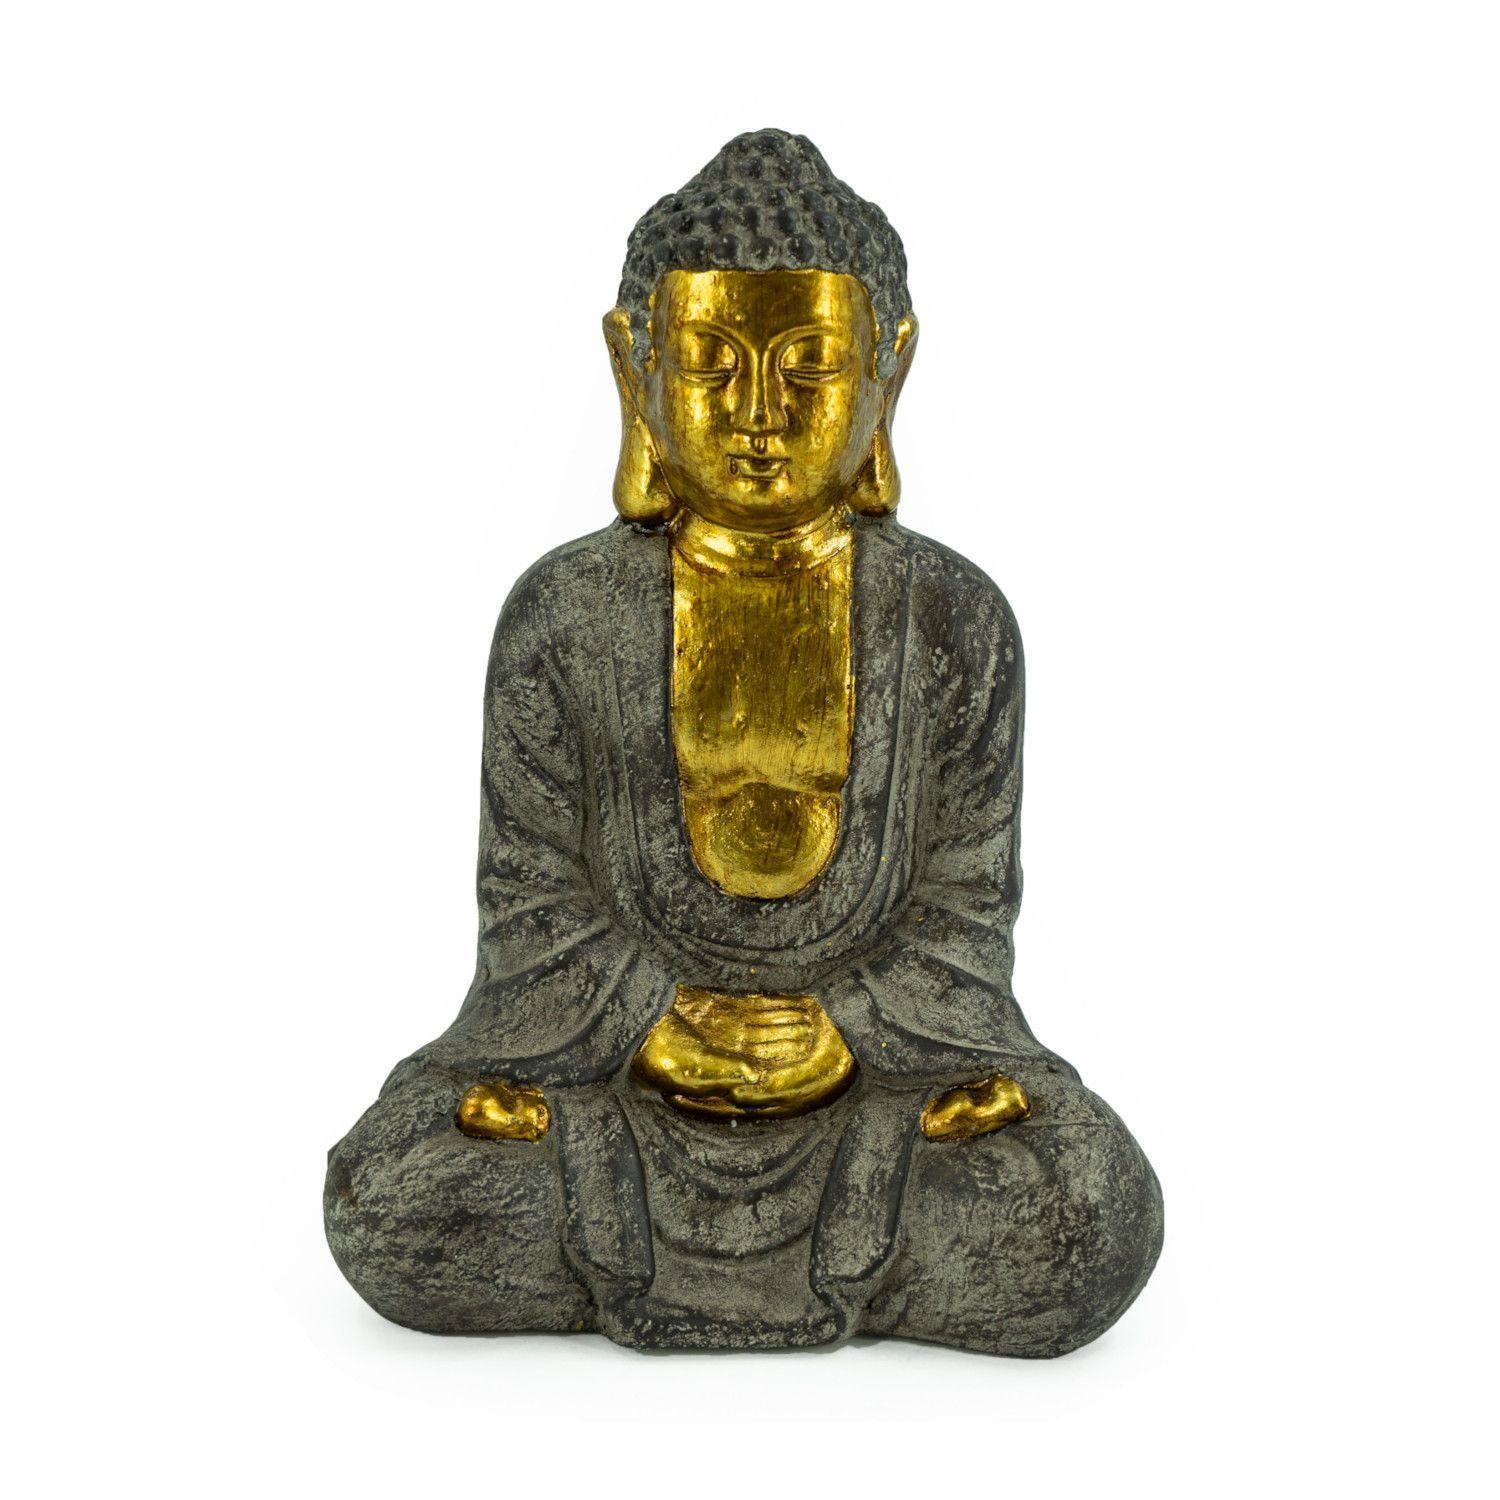 Statue, Figur goldener Deko mit Buddha Buddhafigur Sitzende (1 Rivanto St), Haut Steinoptik